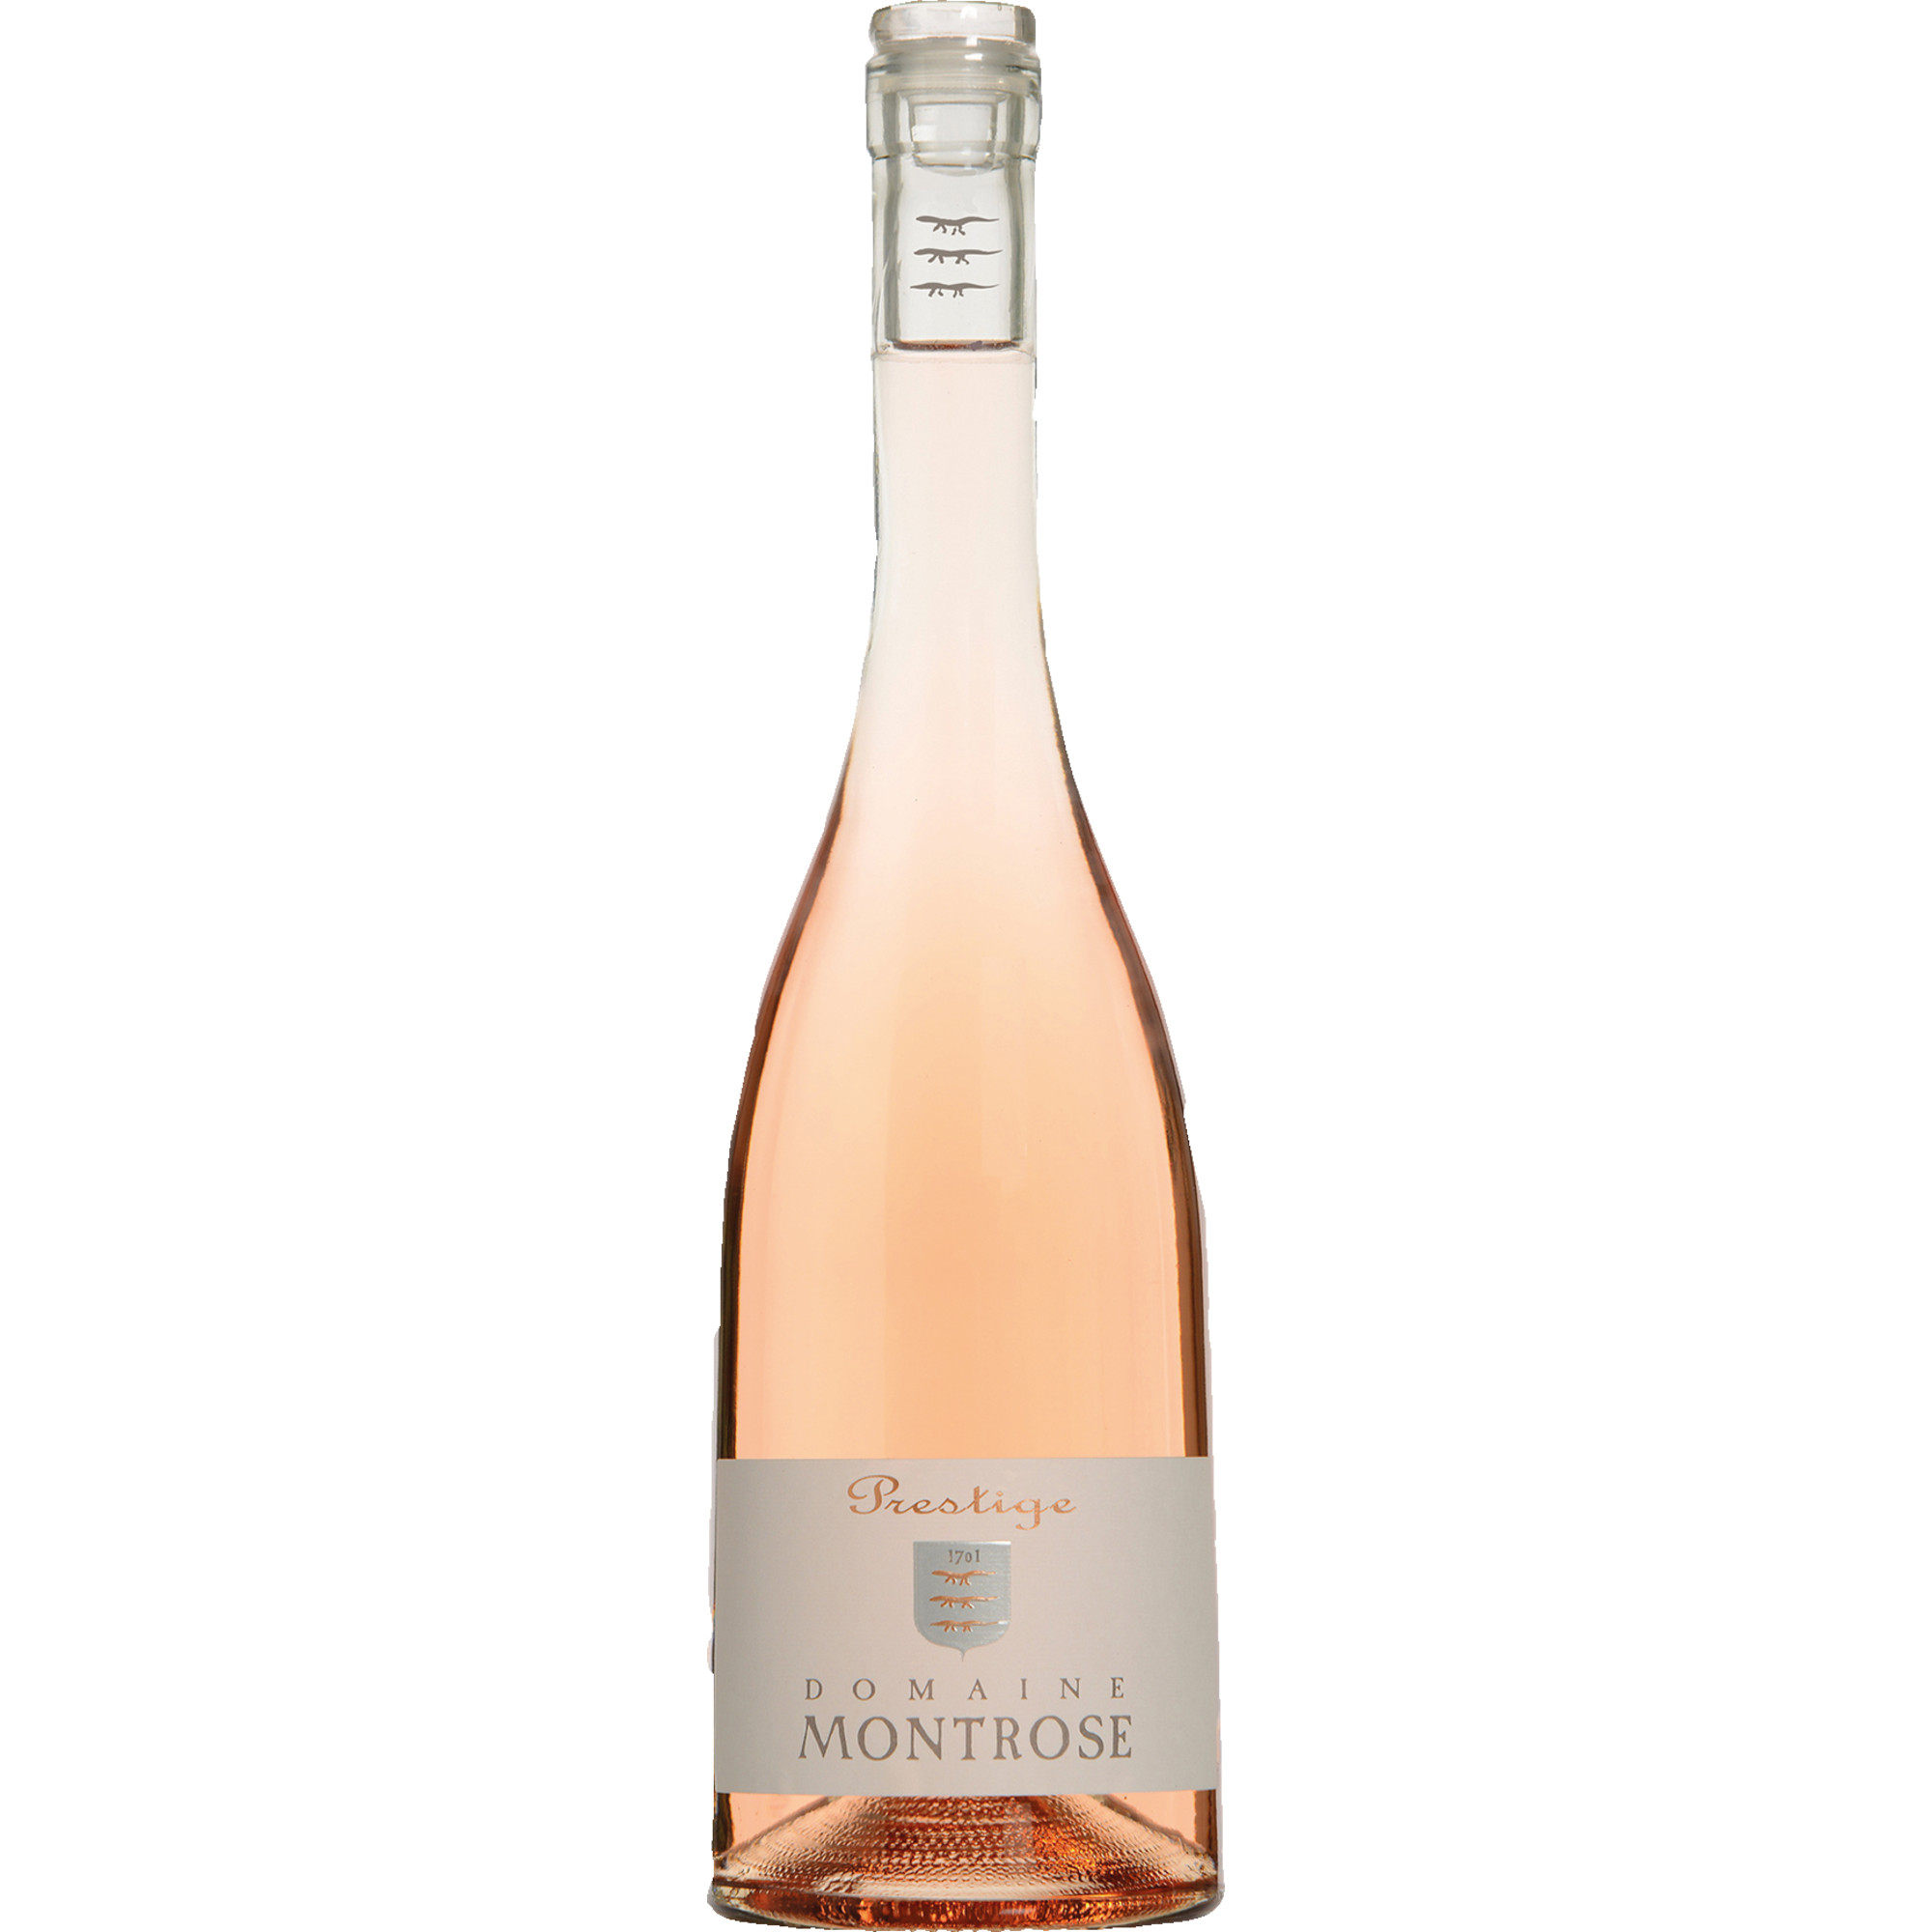 Image of Domaine Montrose Prestige Rosé 2020 - Roséwein, Frankreich, trocken, 0,75l